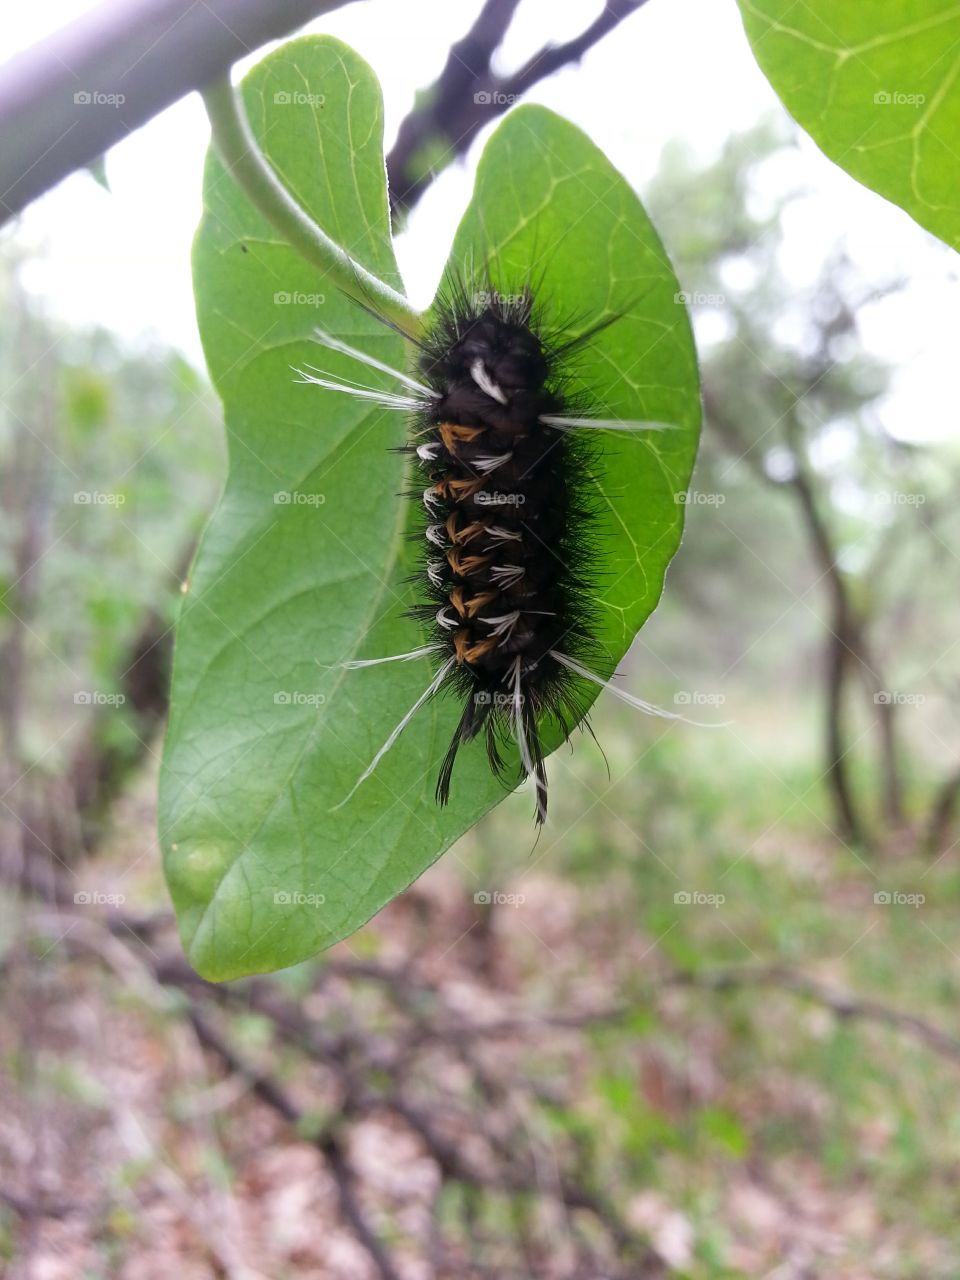 caterpill